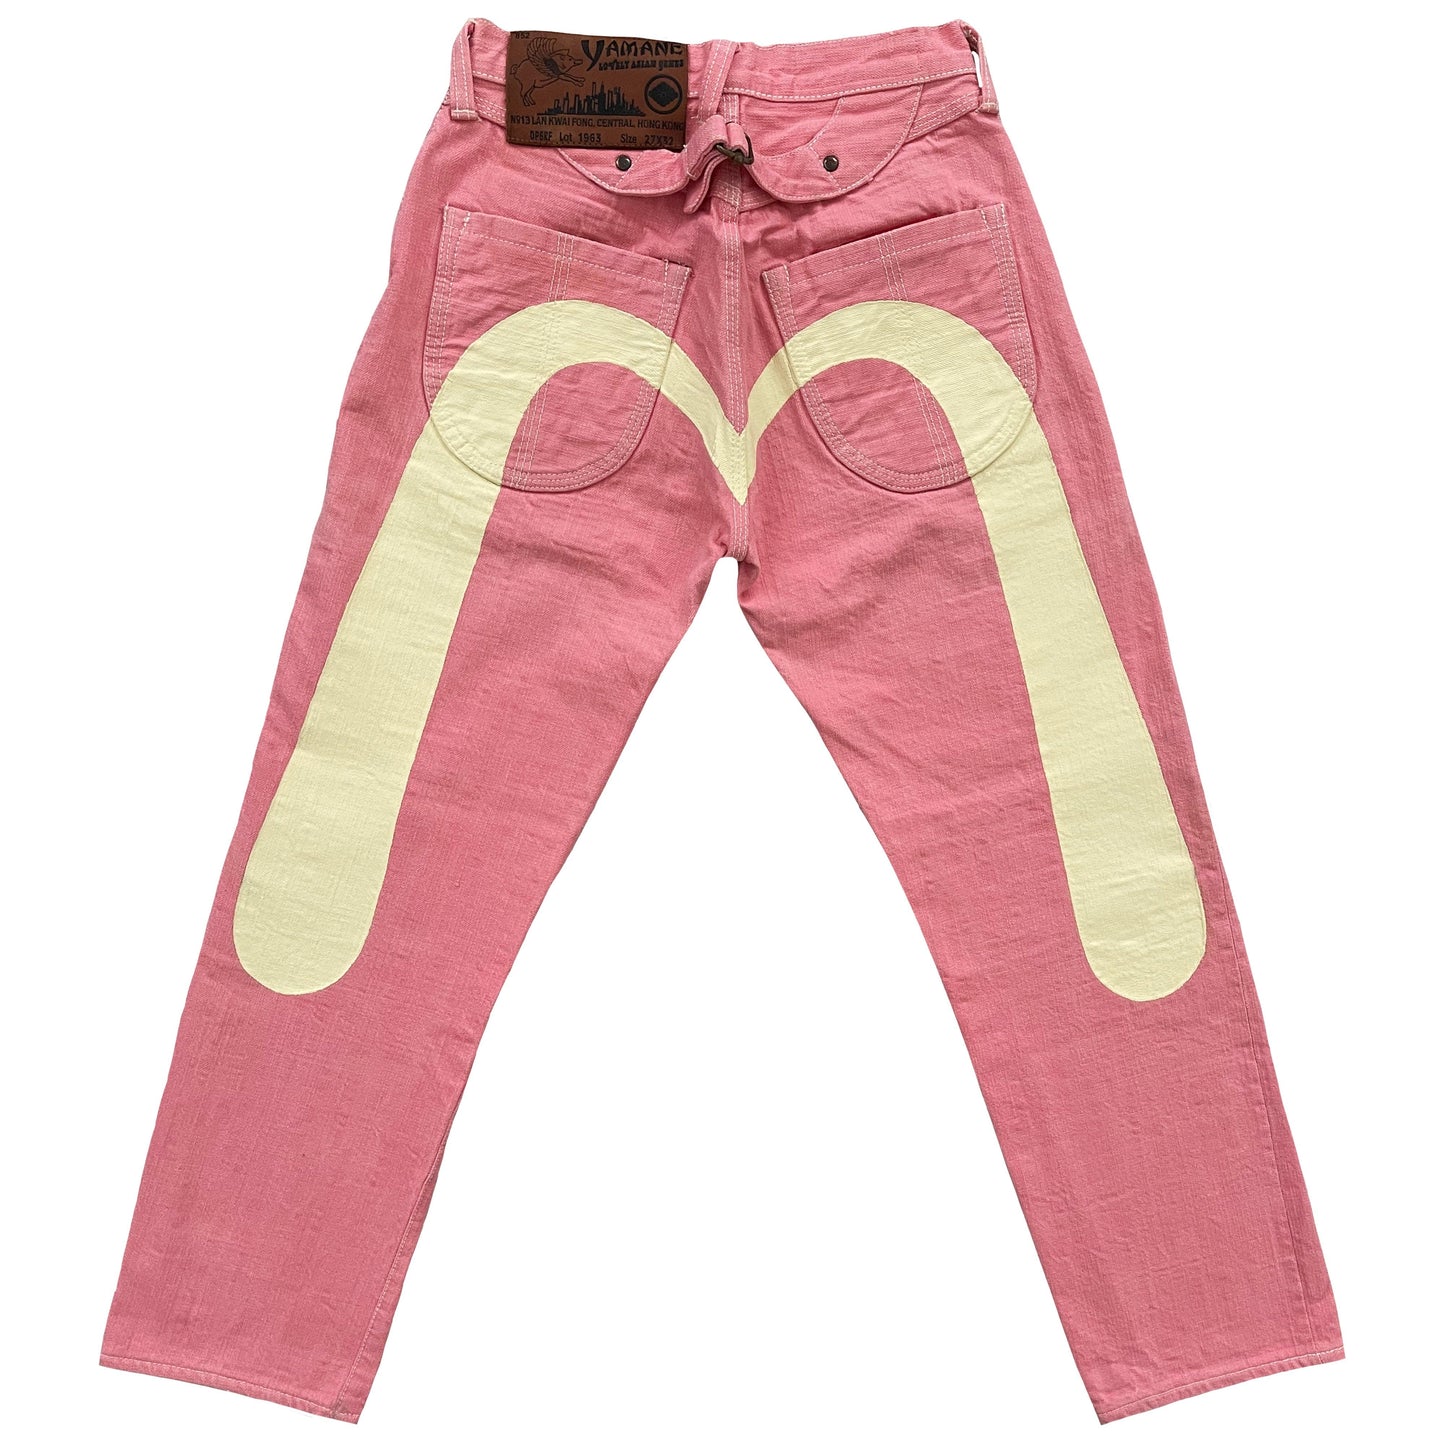 Evisu Daicock Pink Jeans - Known Source